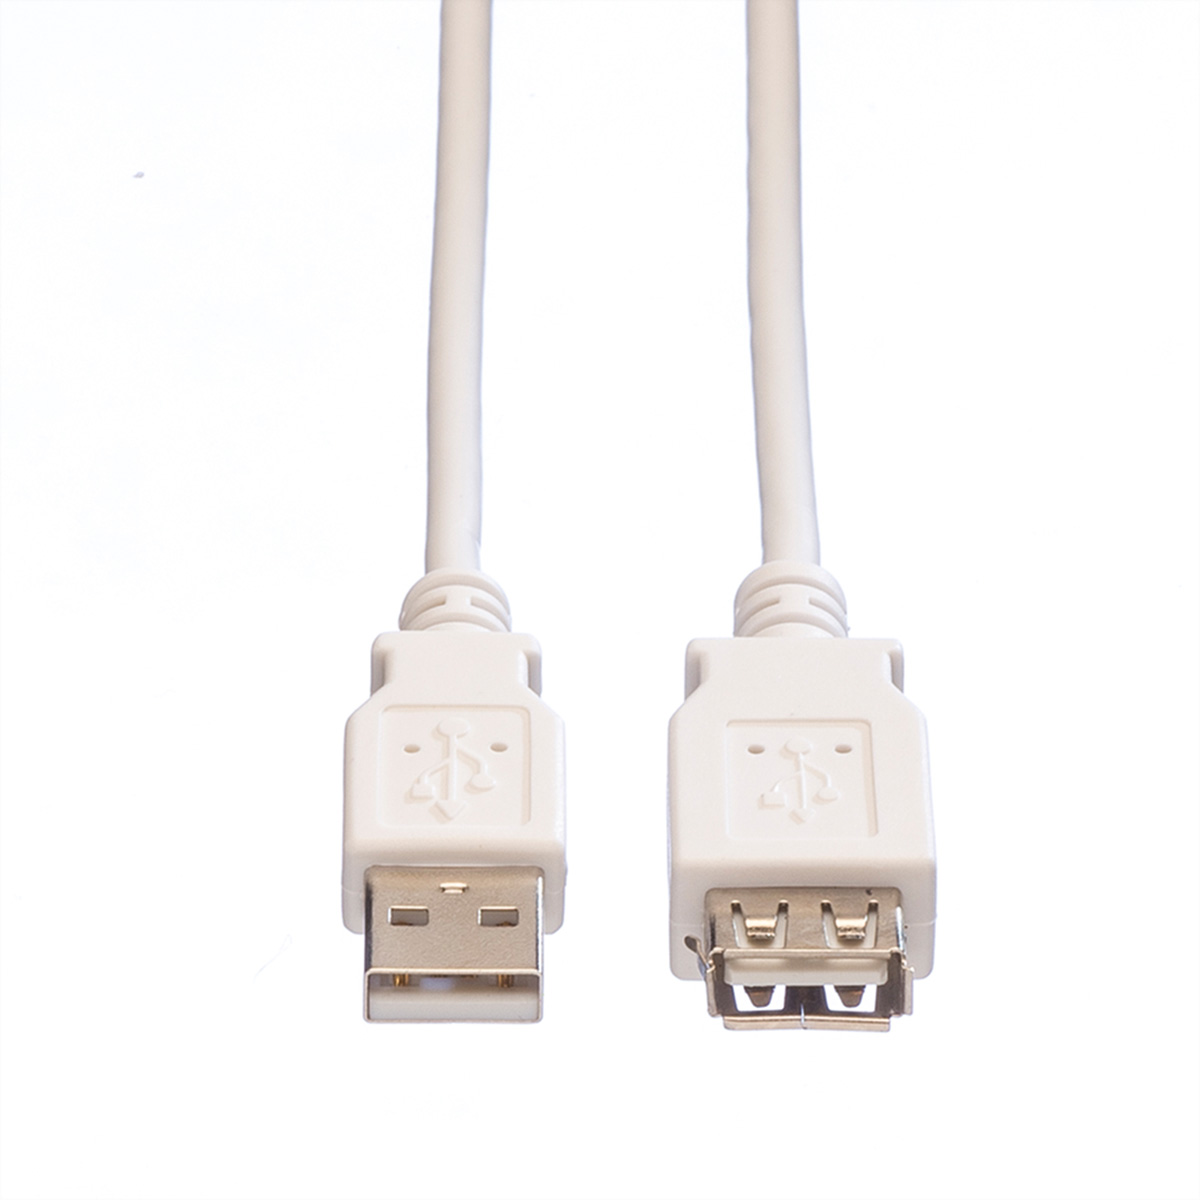 Kabel 2.0 VALUE 2.0 USB Verlängerungskabel USB